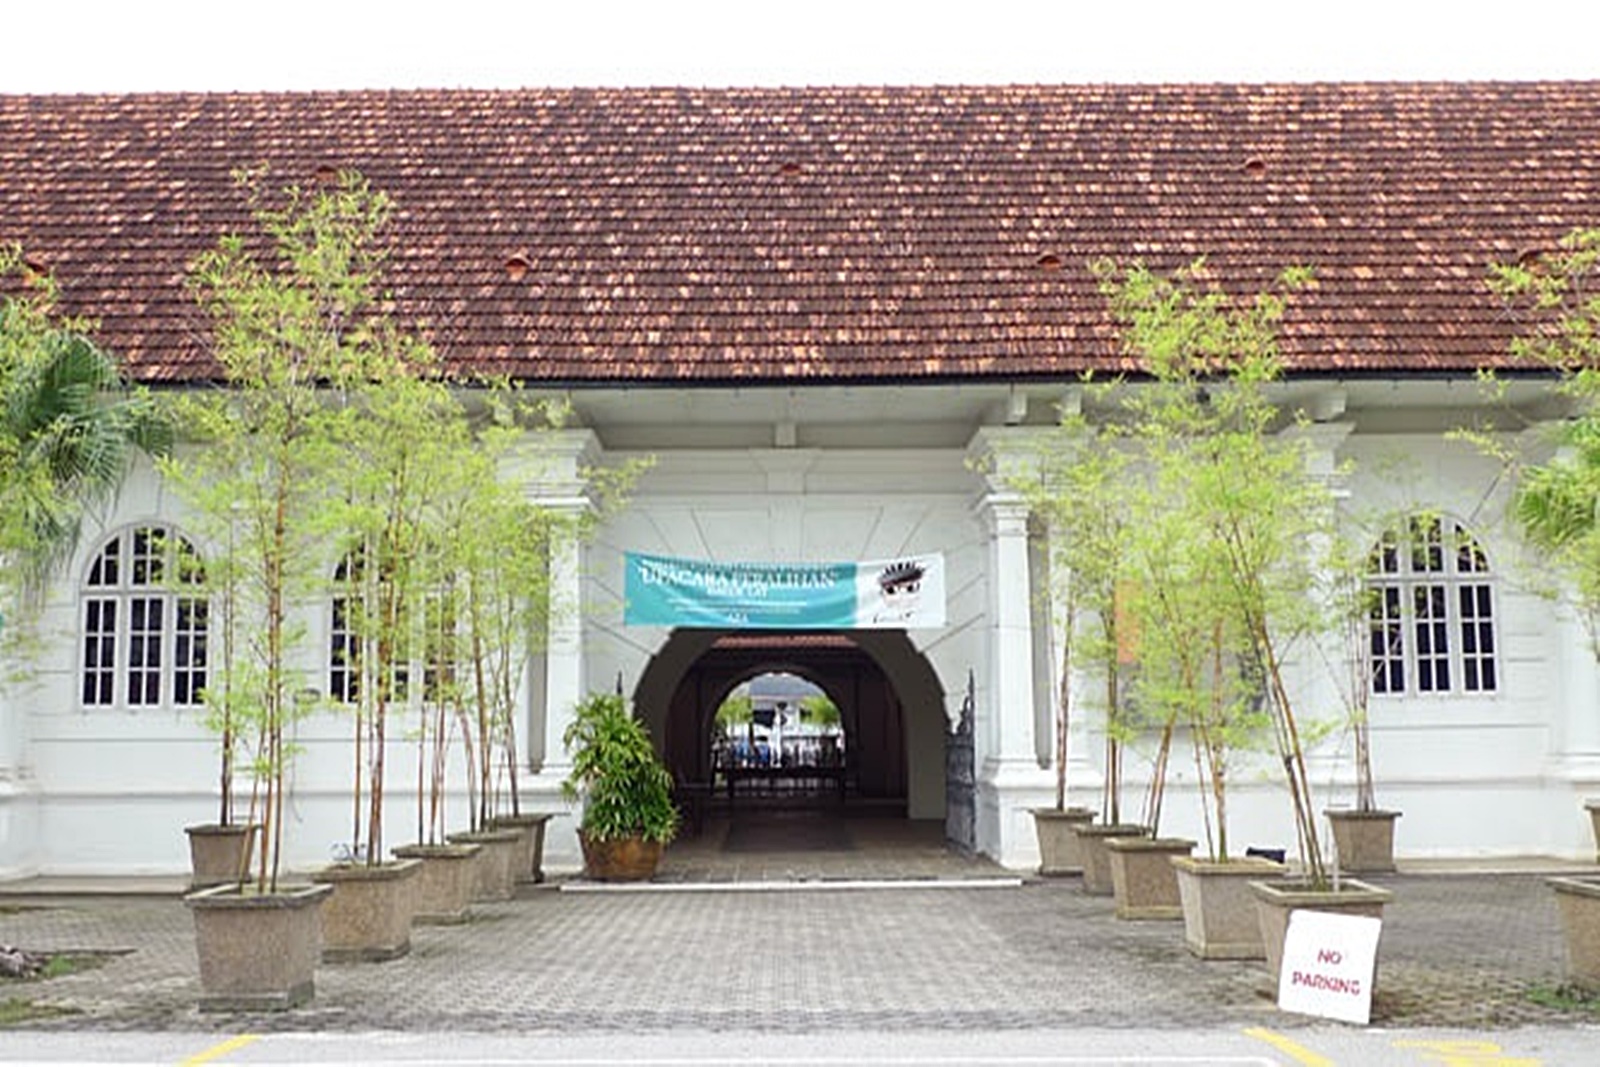 The Pahang Art Museum